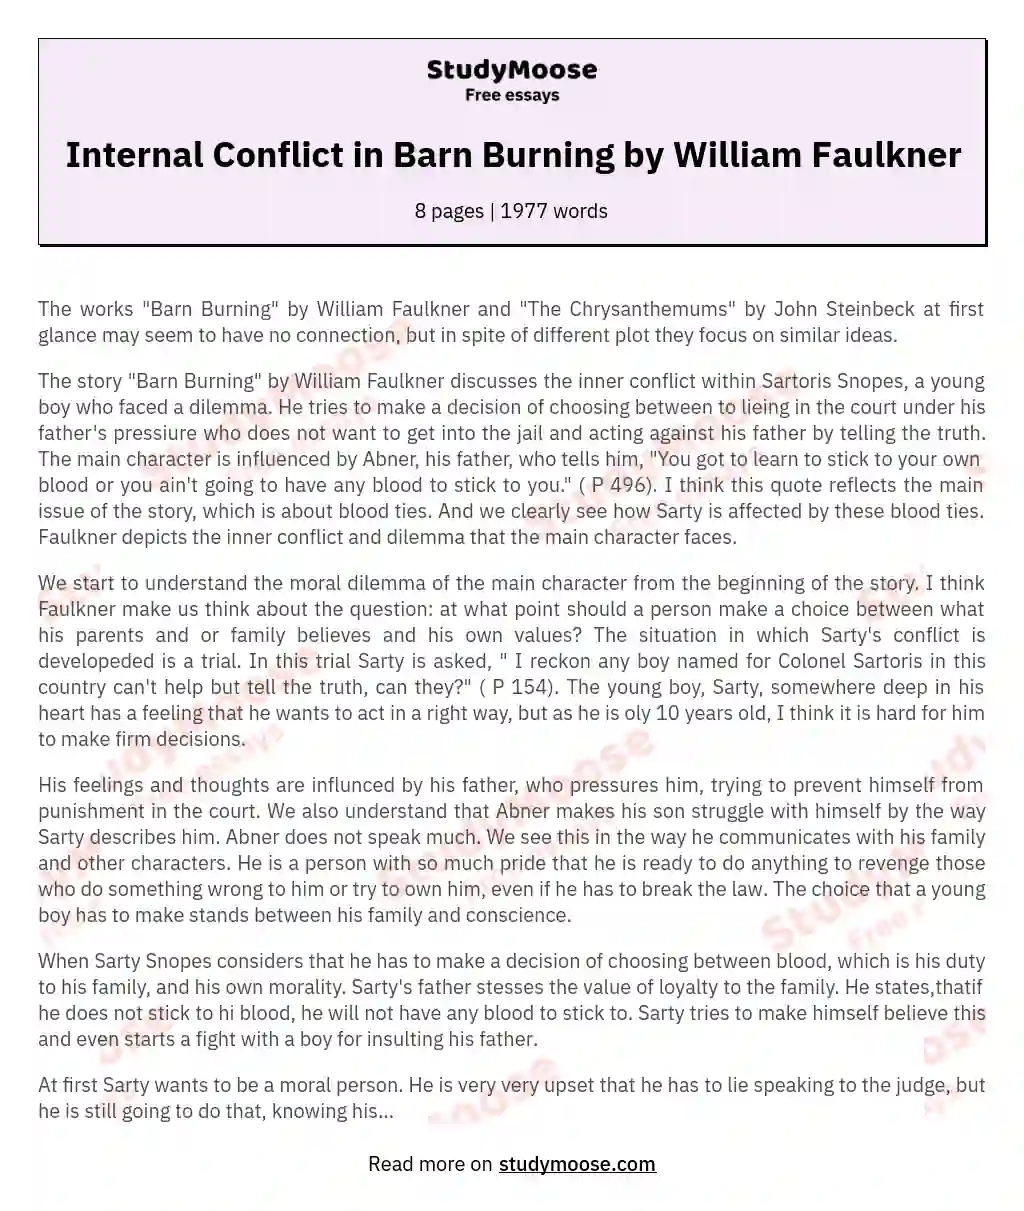 Internal Conflict in Barn Burning by William Faulkner